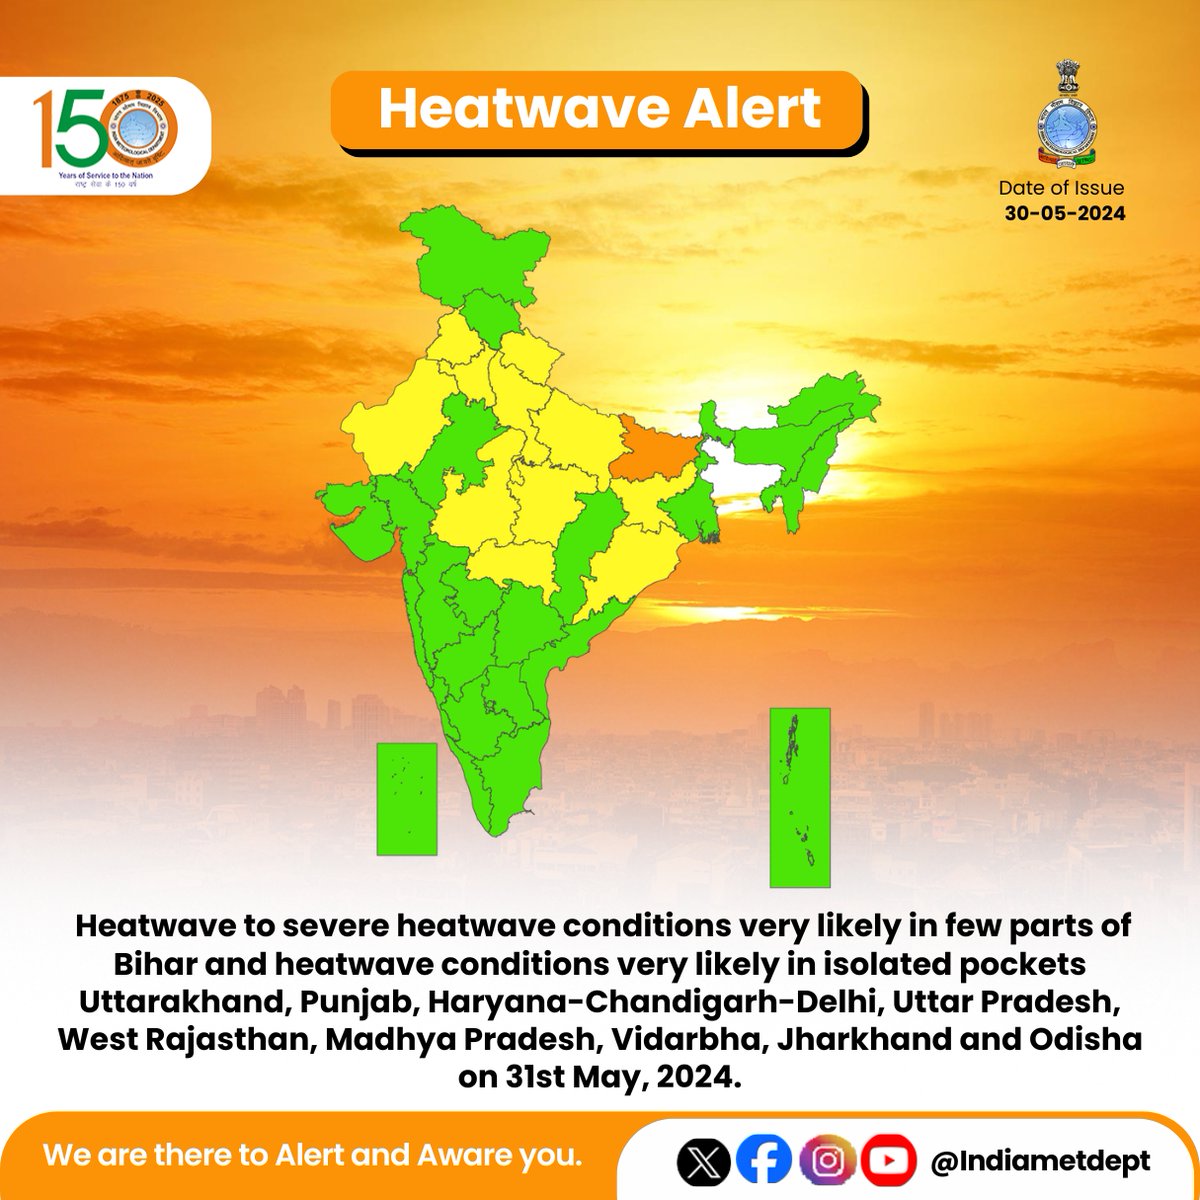 Heatwave to severe heatwave conditions very likely in few parts of Bihar and heatwave conditions very likely in isolated pockets Uttarakhand, Punjab, Haryana-Chandigarh-Delhi, Uttar Pradesh, West Rajasthan, Madhya Pradesh, Vidarbha, Jharkhand and Odisha on 31st May, 2024.